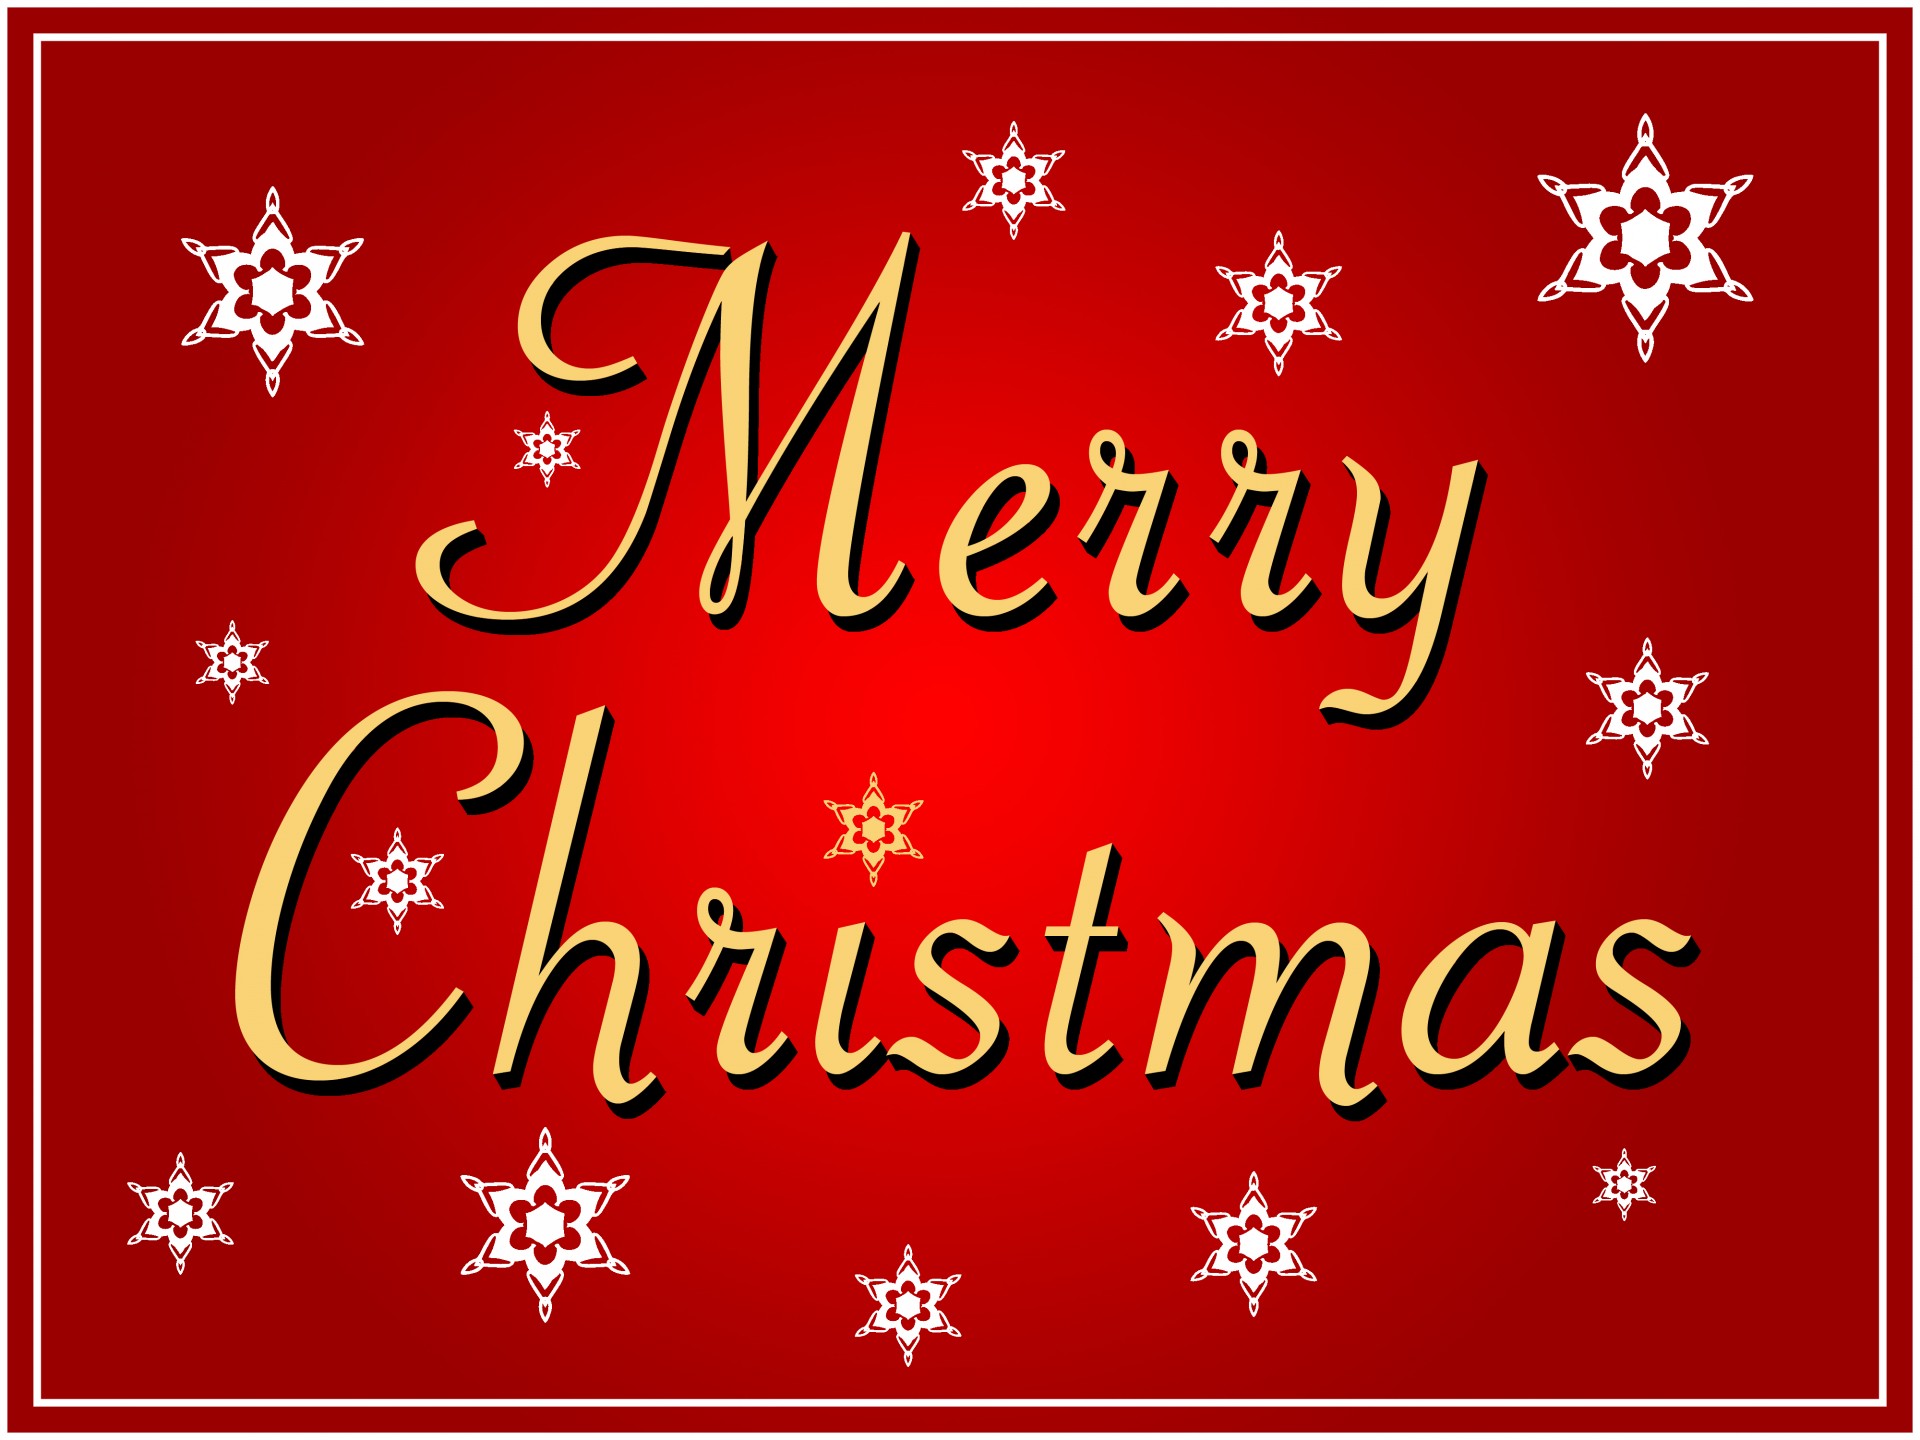 #Merry-Christmas, #Merry-Christmas-status, #Christmas-whatsapp-status, #Merry-Christmas-images